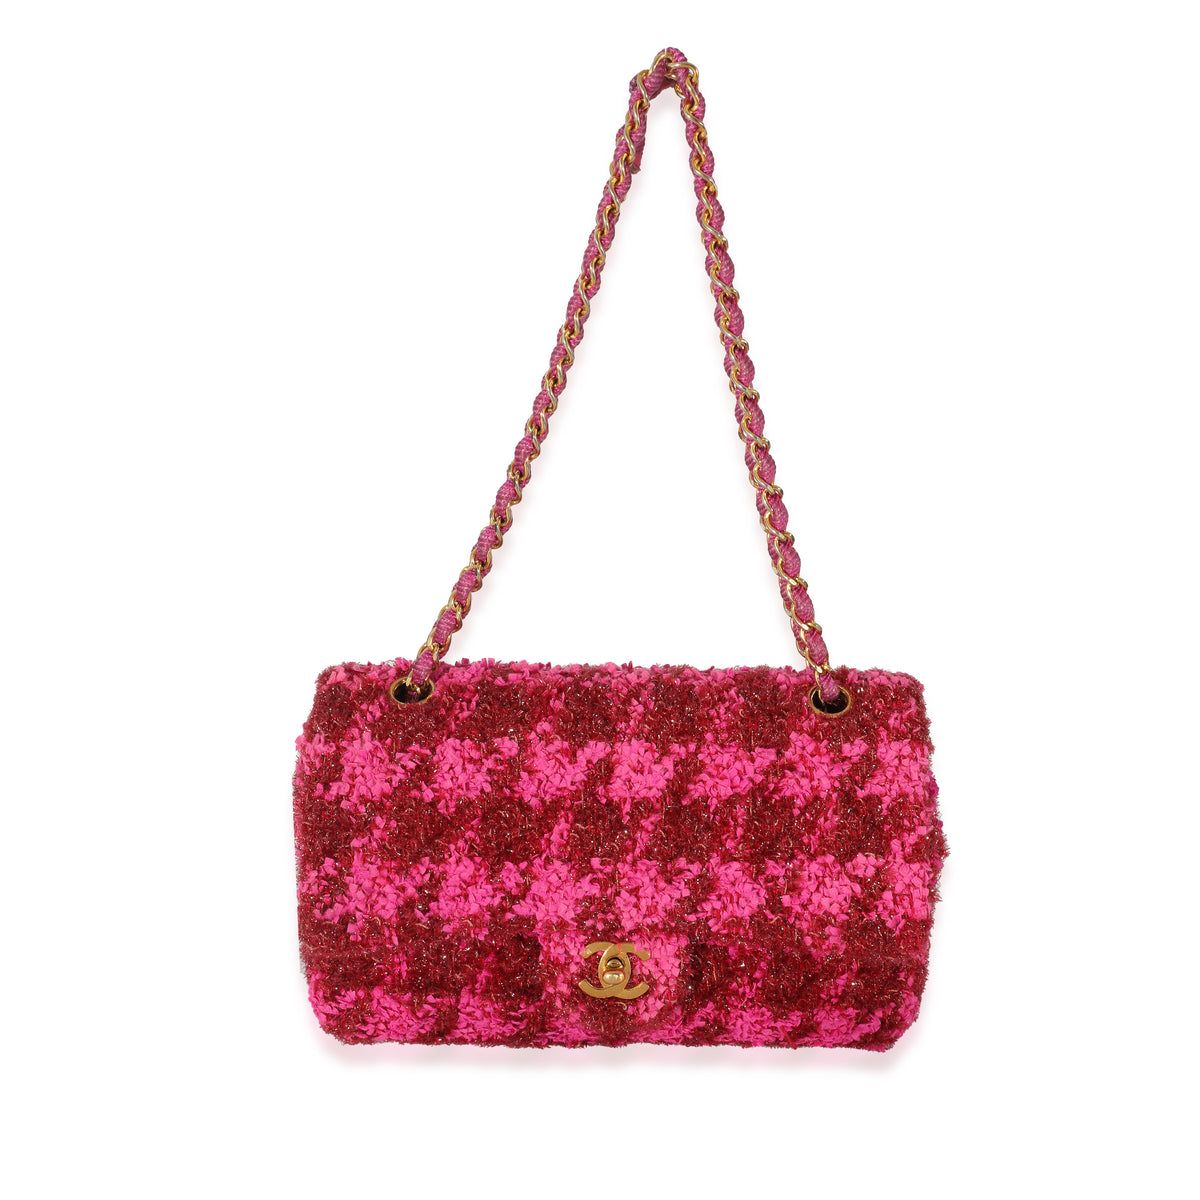 Chanel Vintage Metallic Boucle Red Pink Medium Classic Flap Bag